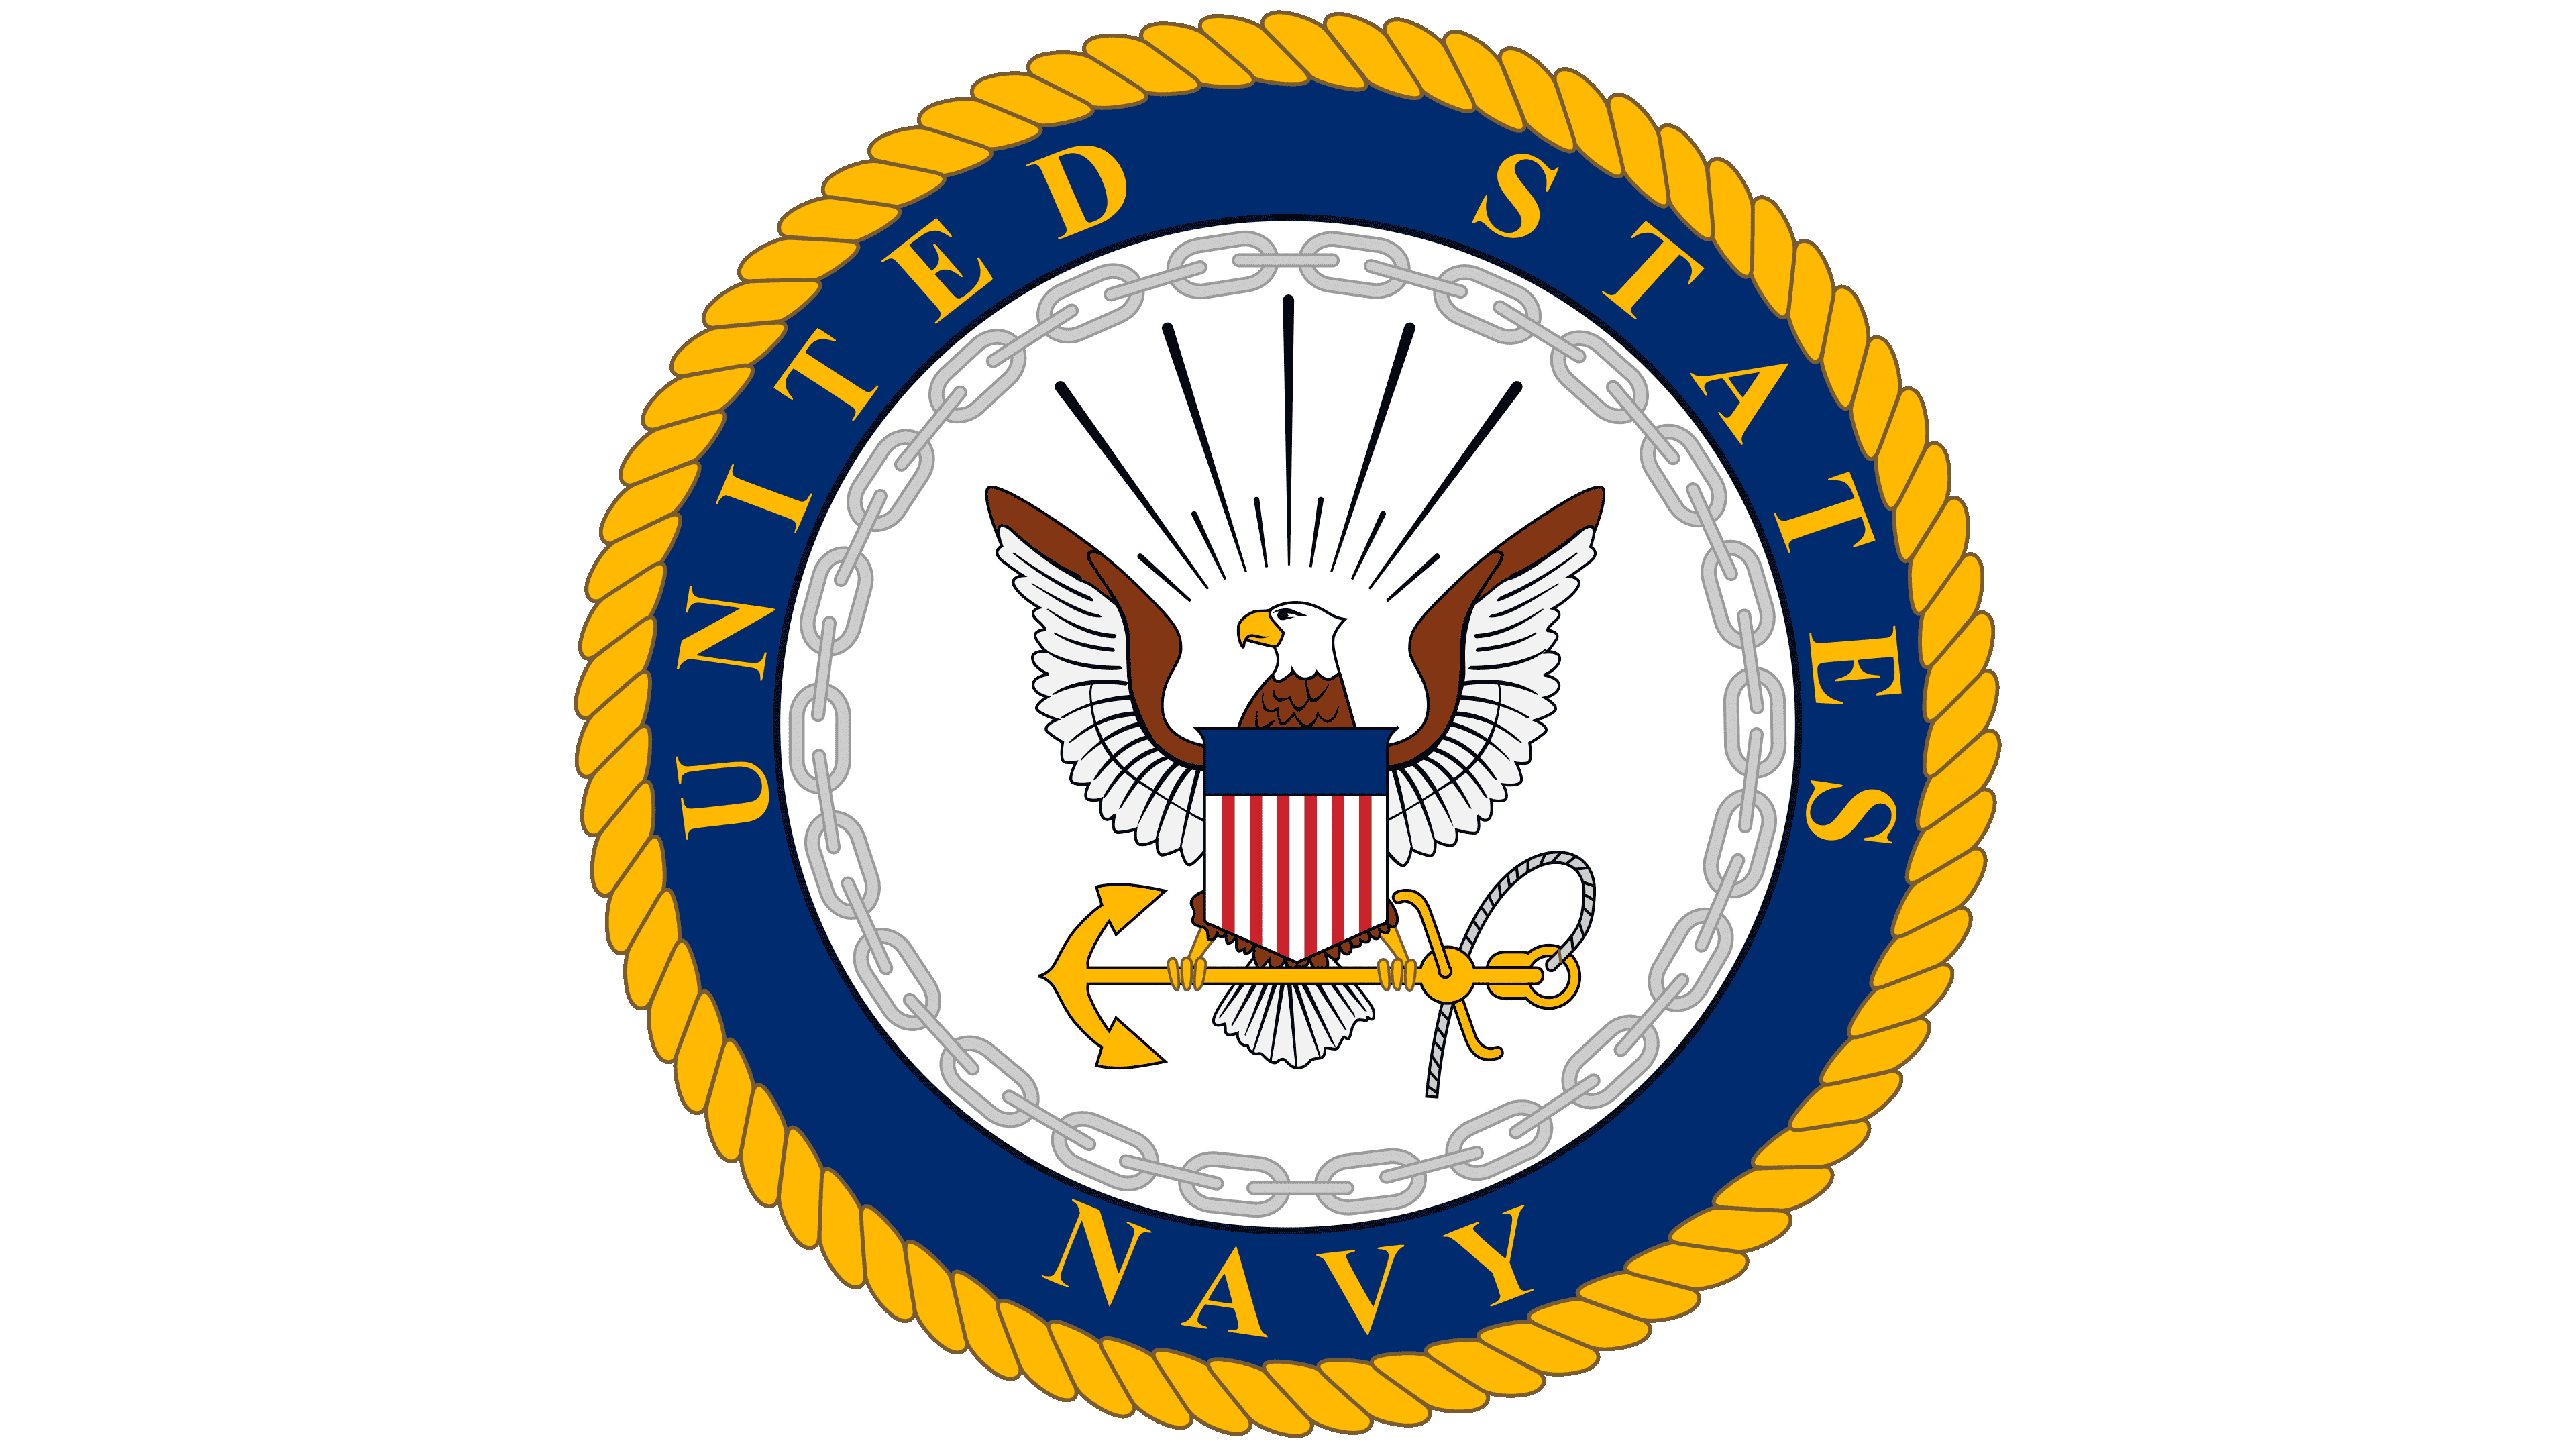 https://logos-world.net/wp-content/uploads/2021/09/Navy-Logo.png